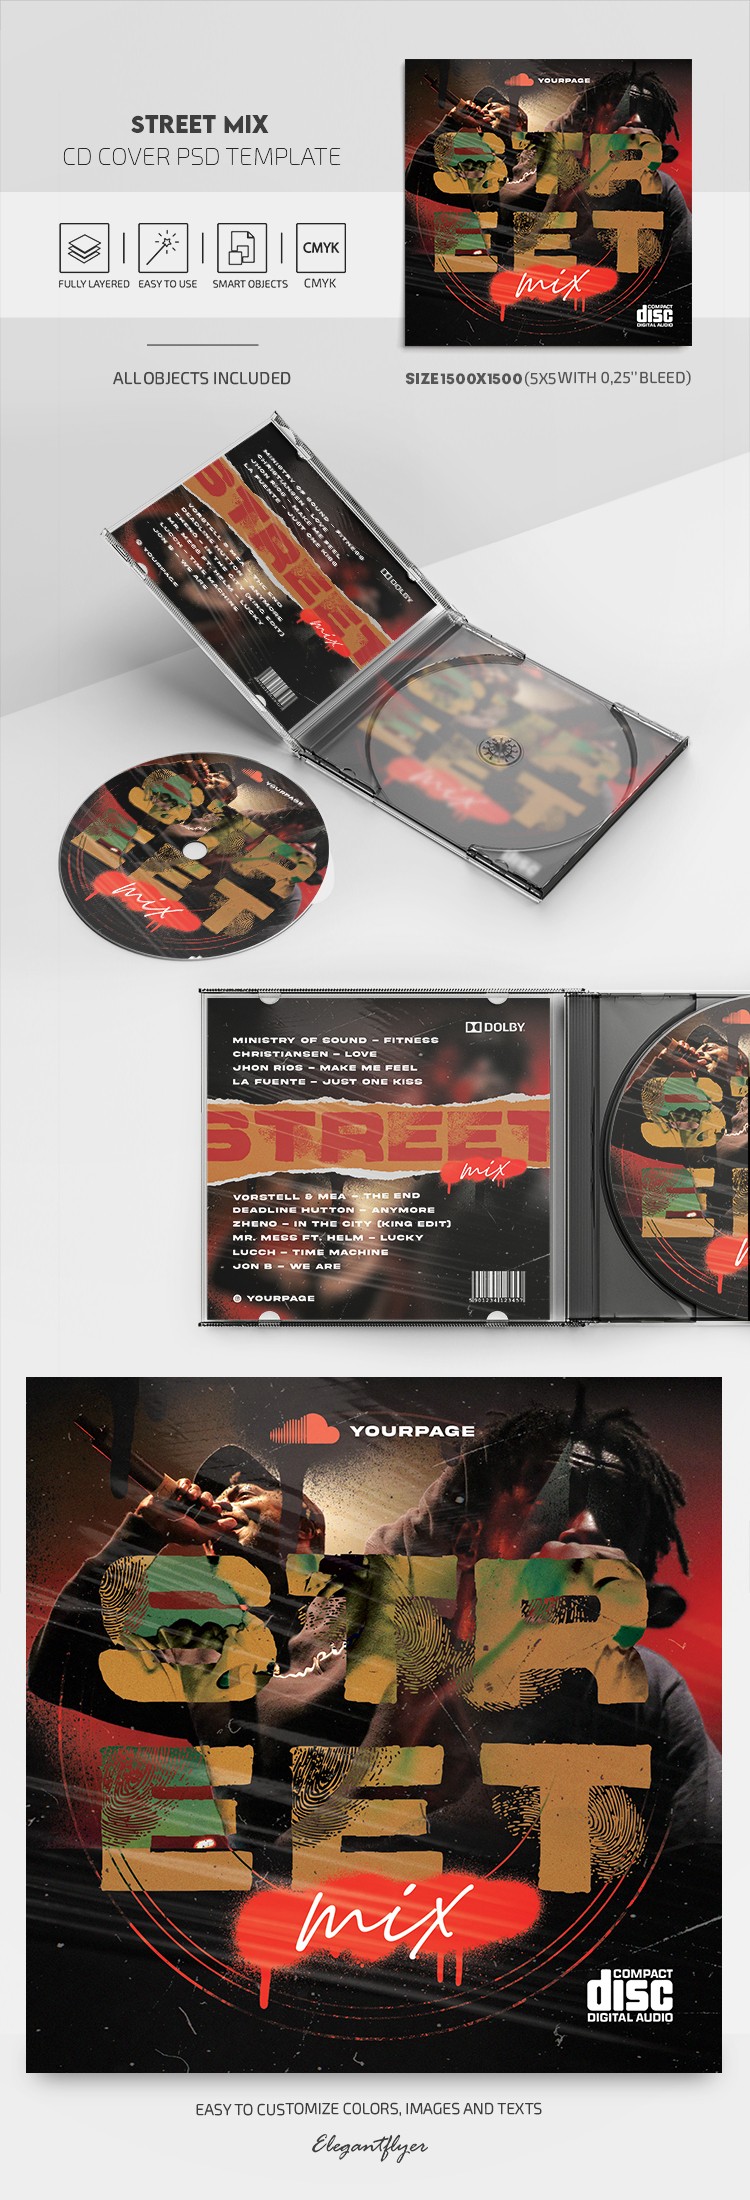 Couverture CD Street Mix by ElegantFlyer